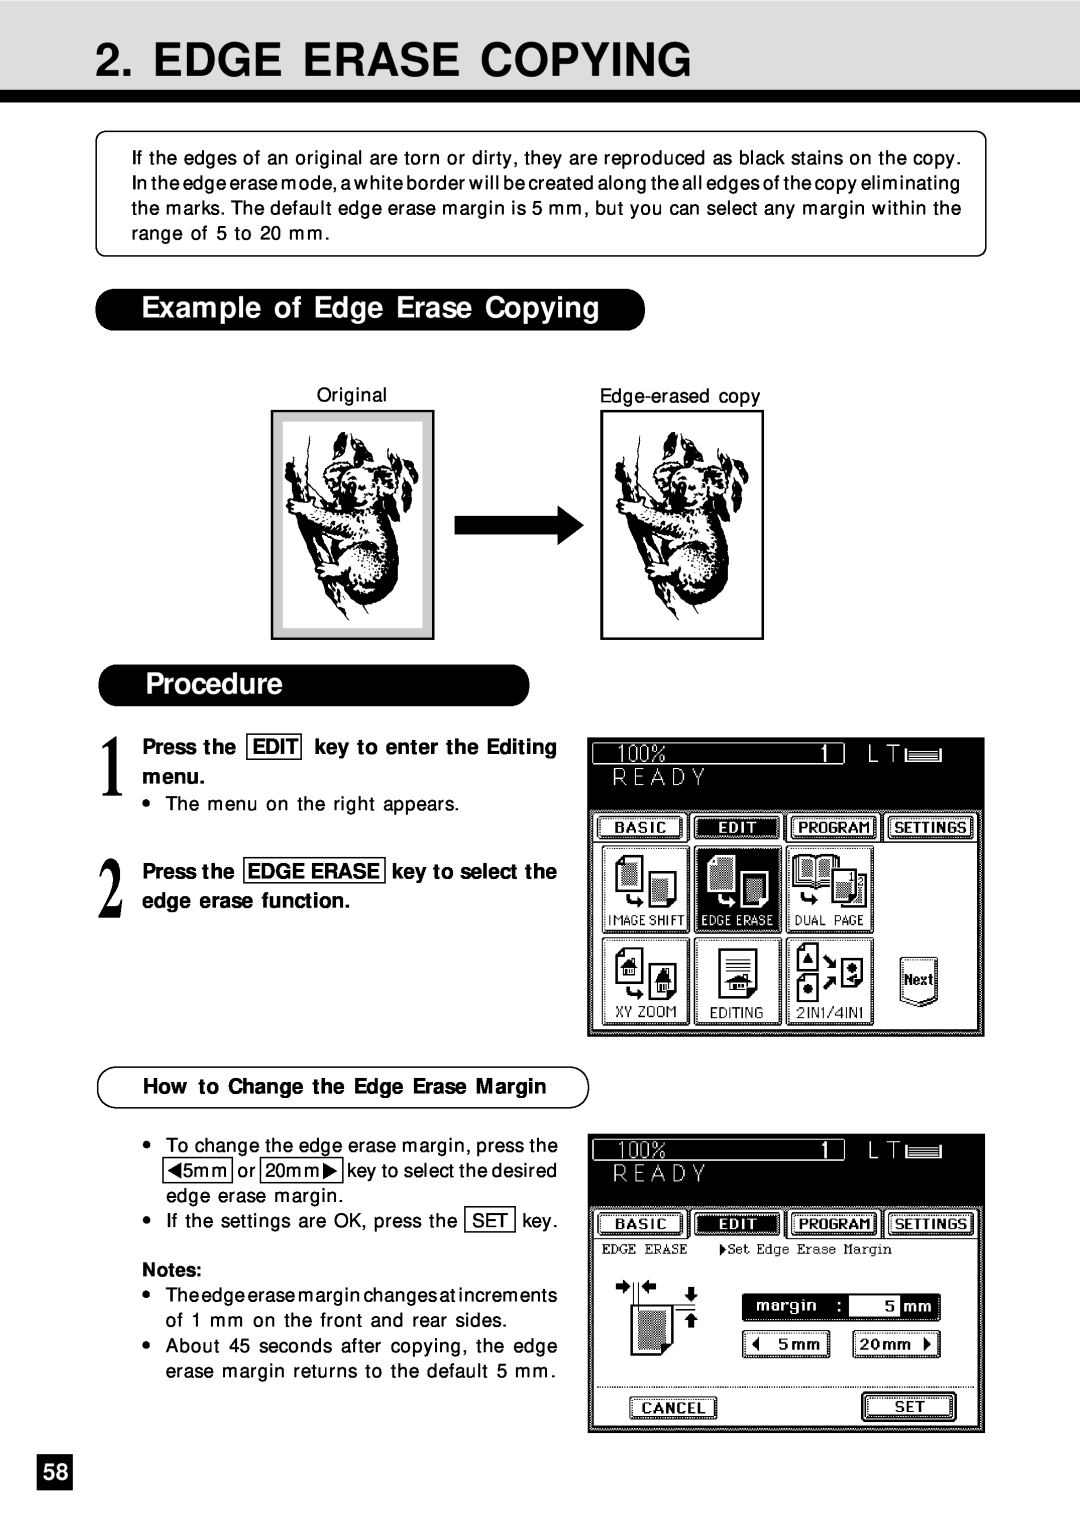 Sharp AR-650 Example of Edge Erase Copying, Press the EDGE ERASE key to select the edge erase function, Procedure 